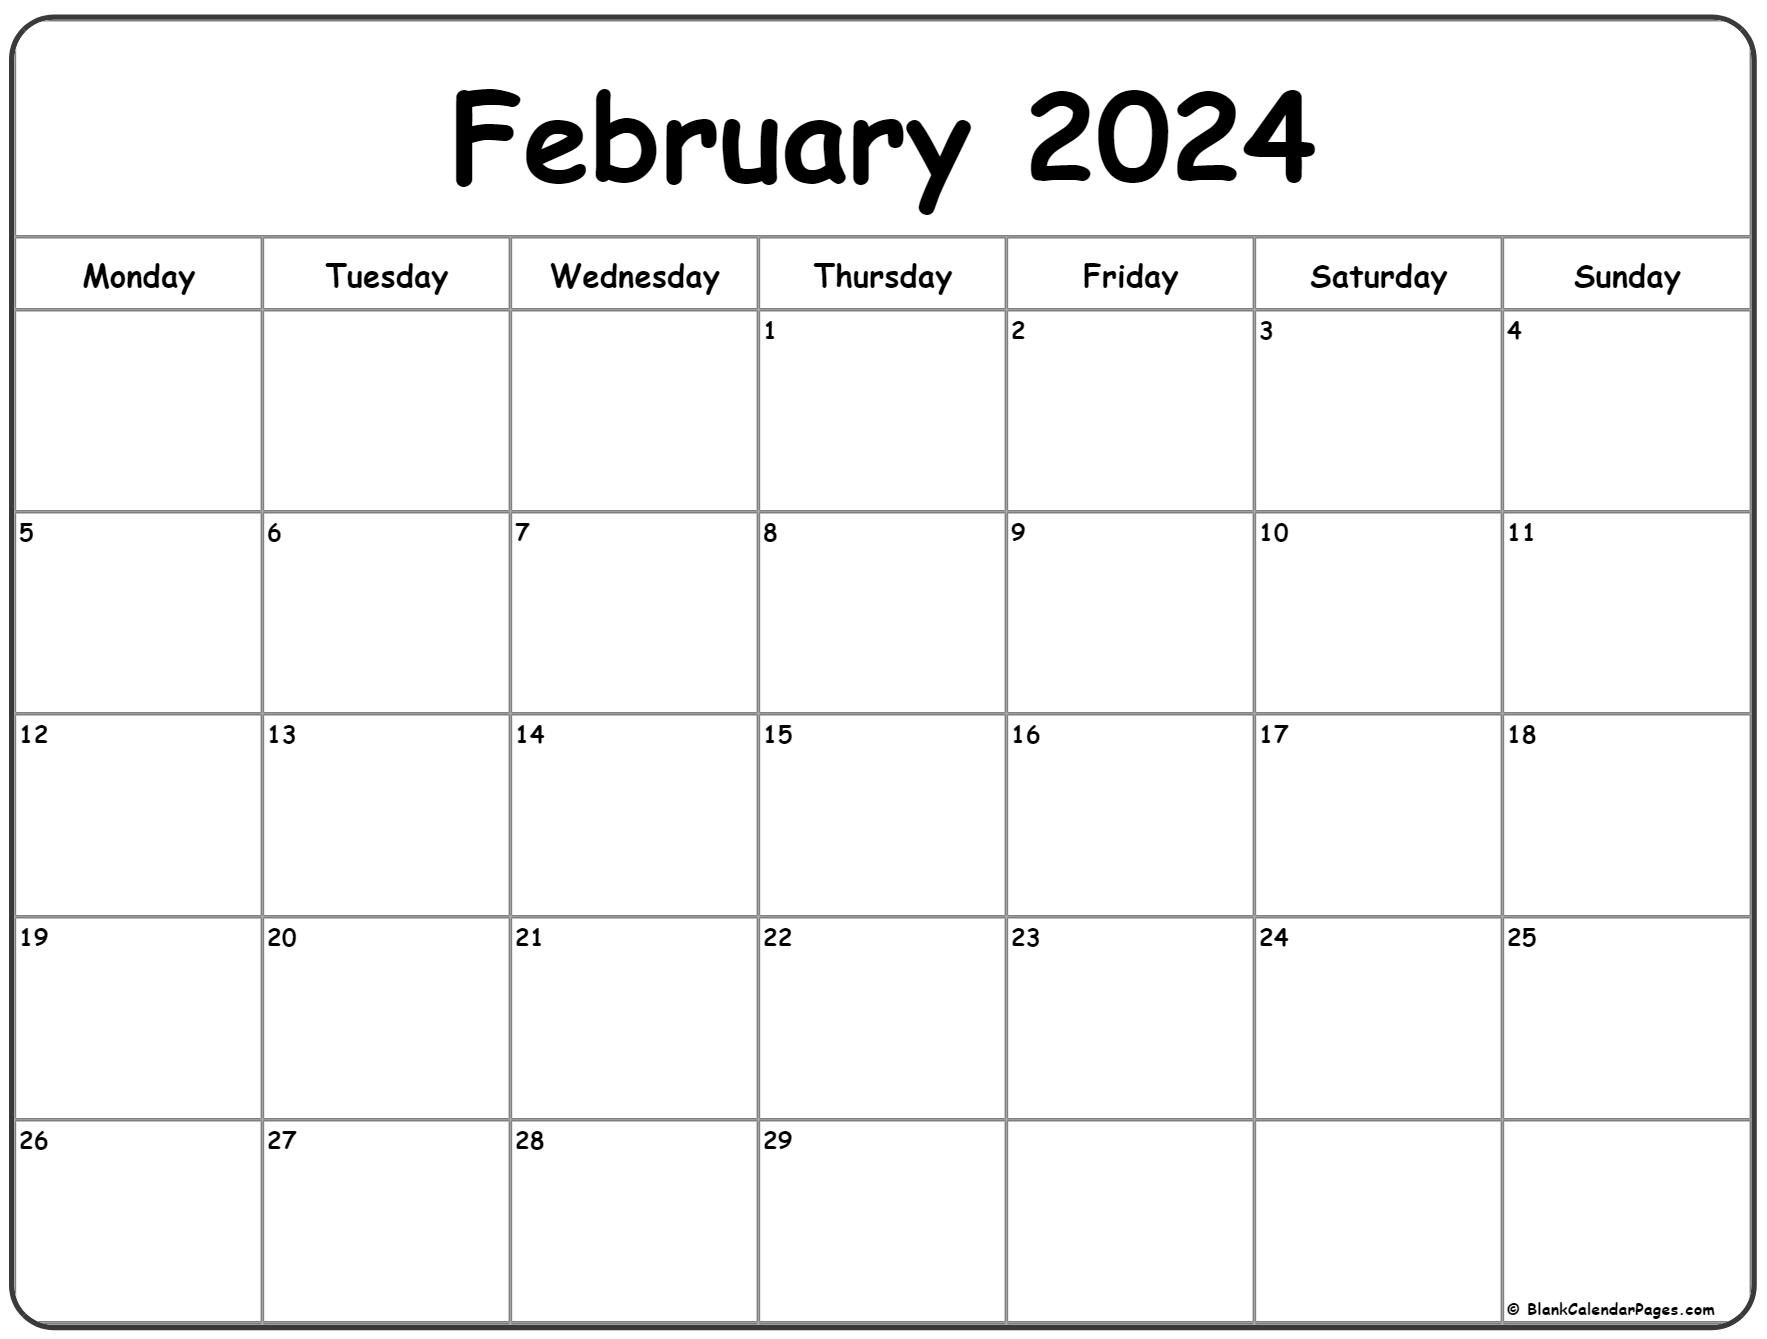 February Blank Calendar 2022 February 2022 Monday Calendar | Monday To Sunday